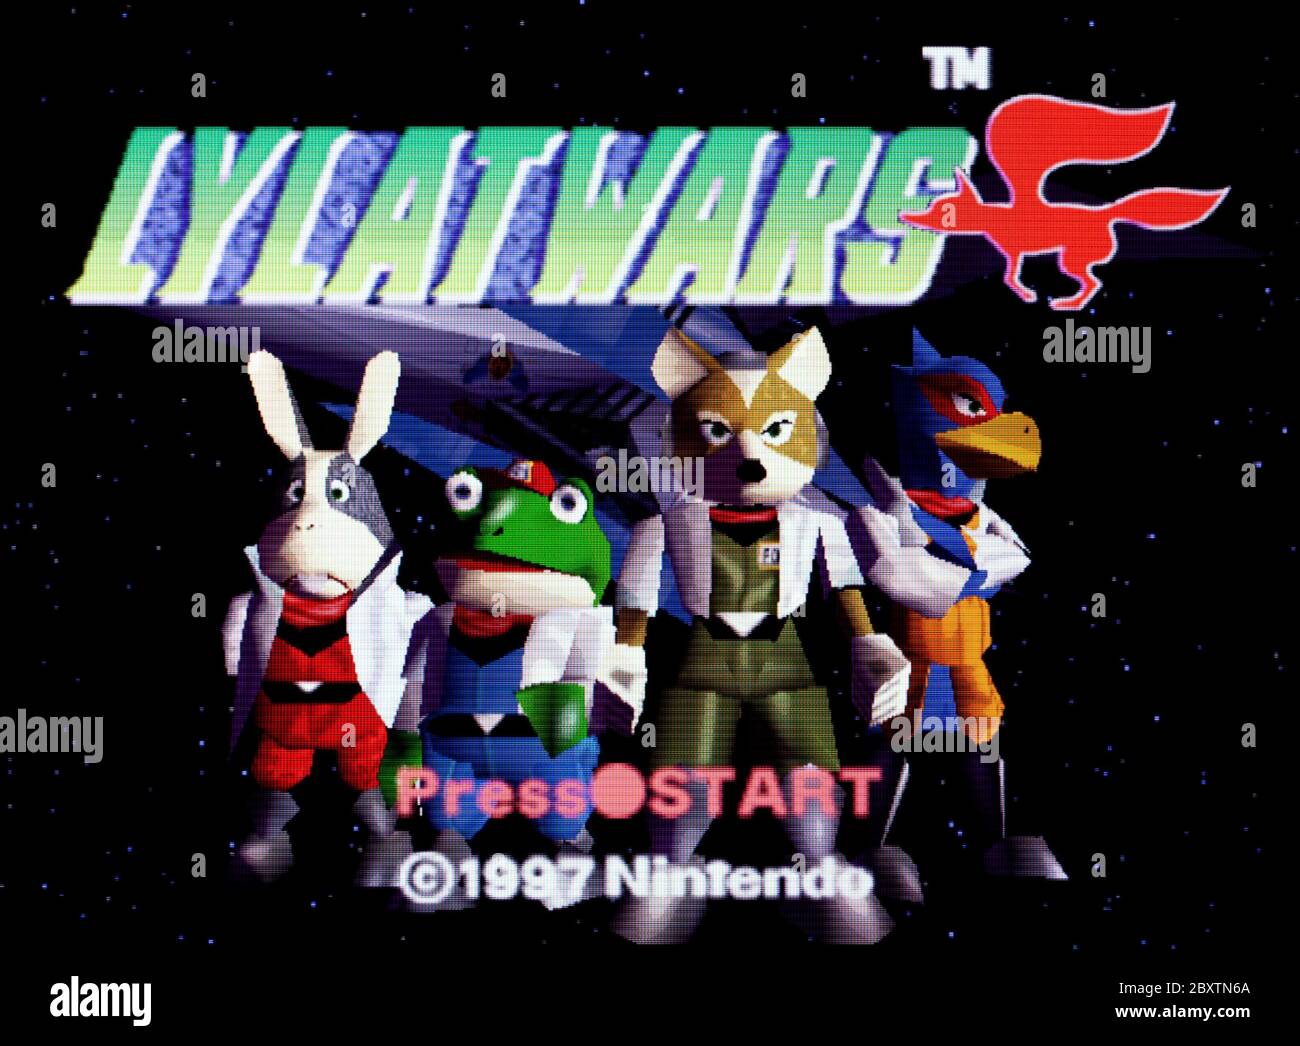 Lylat Wars - Nintendo 64 Videogame - Editorial use only Stock Photo - Alamy